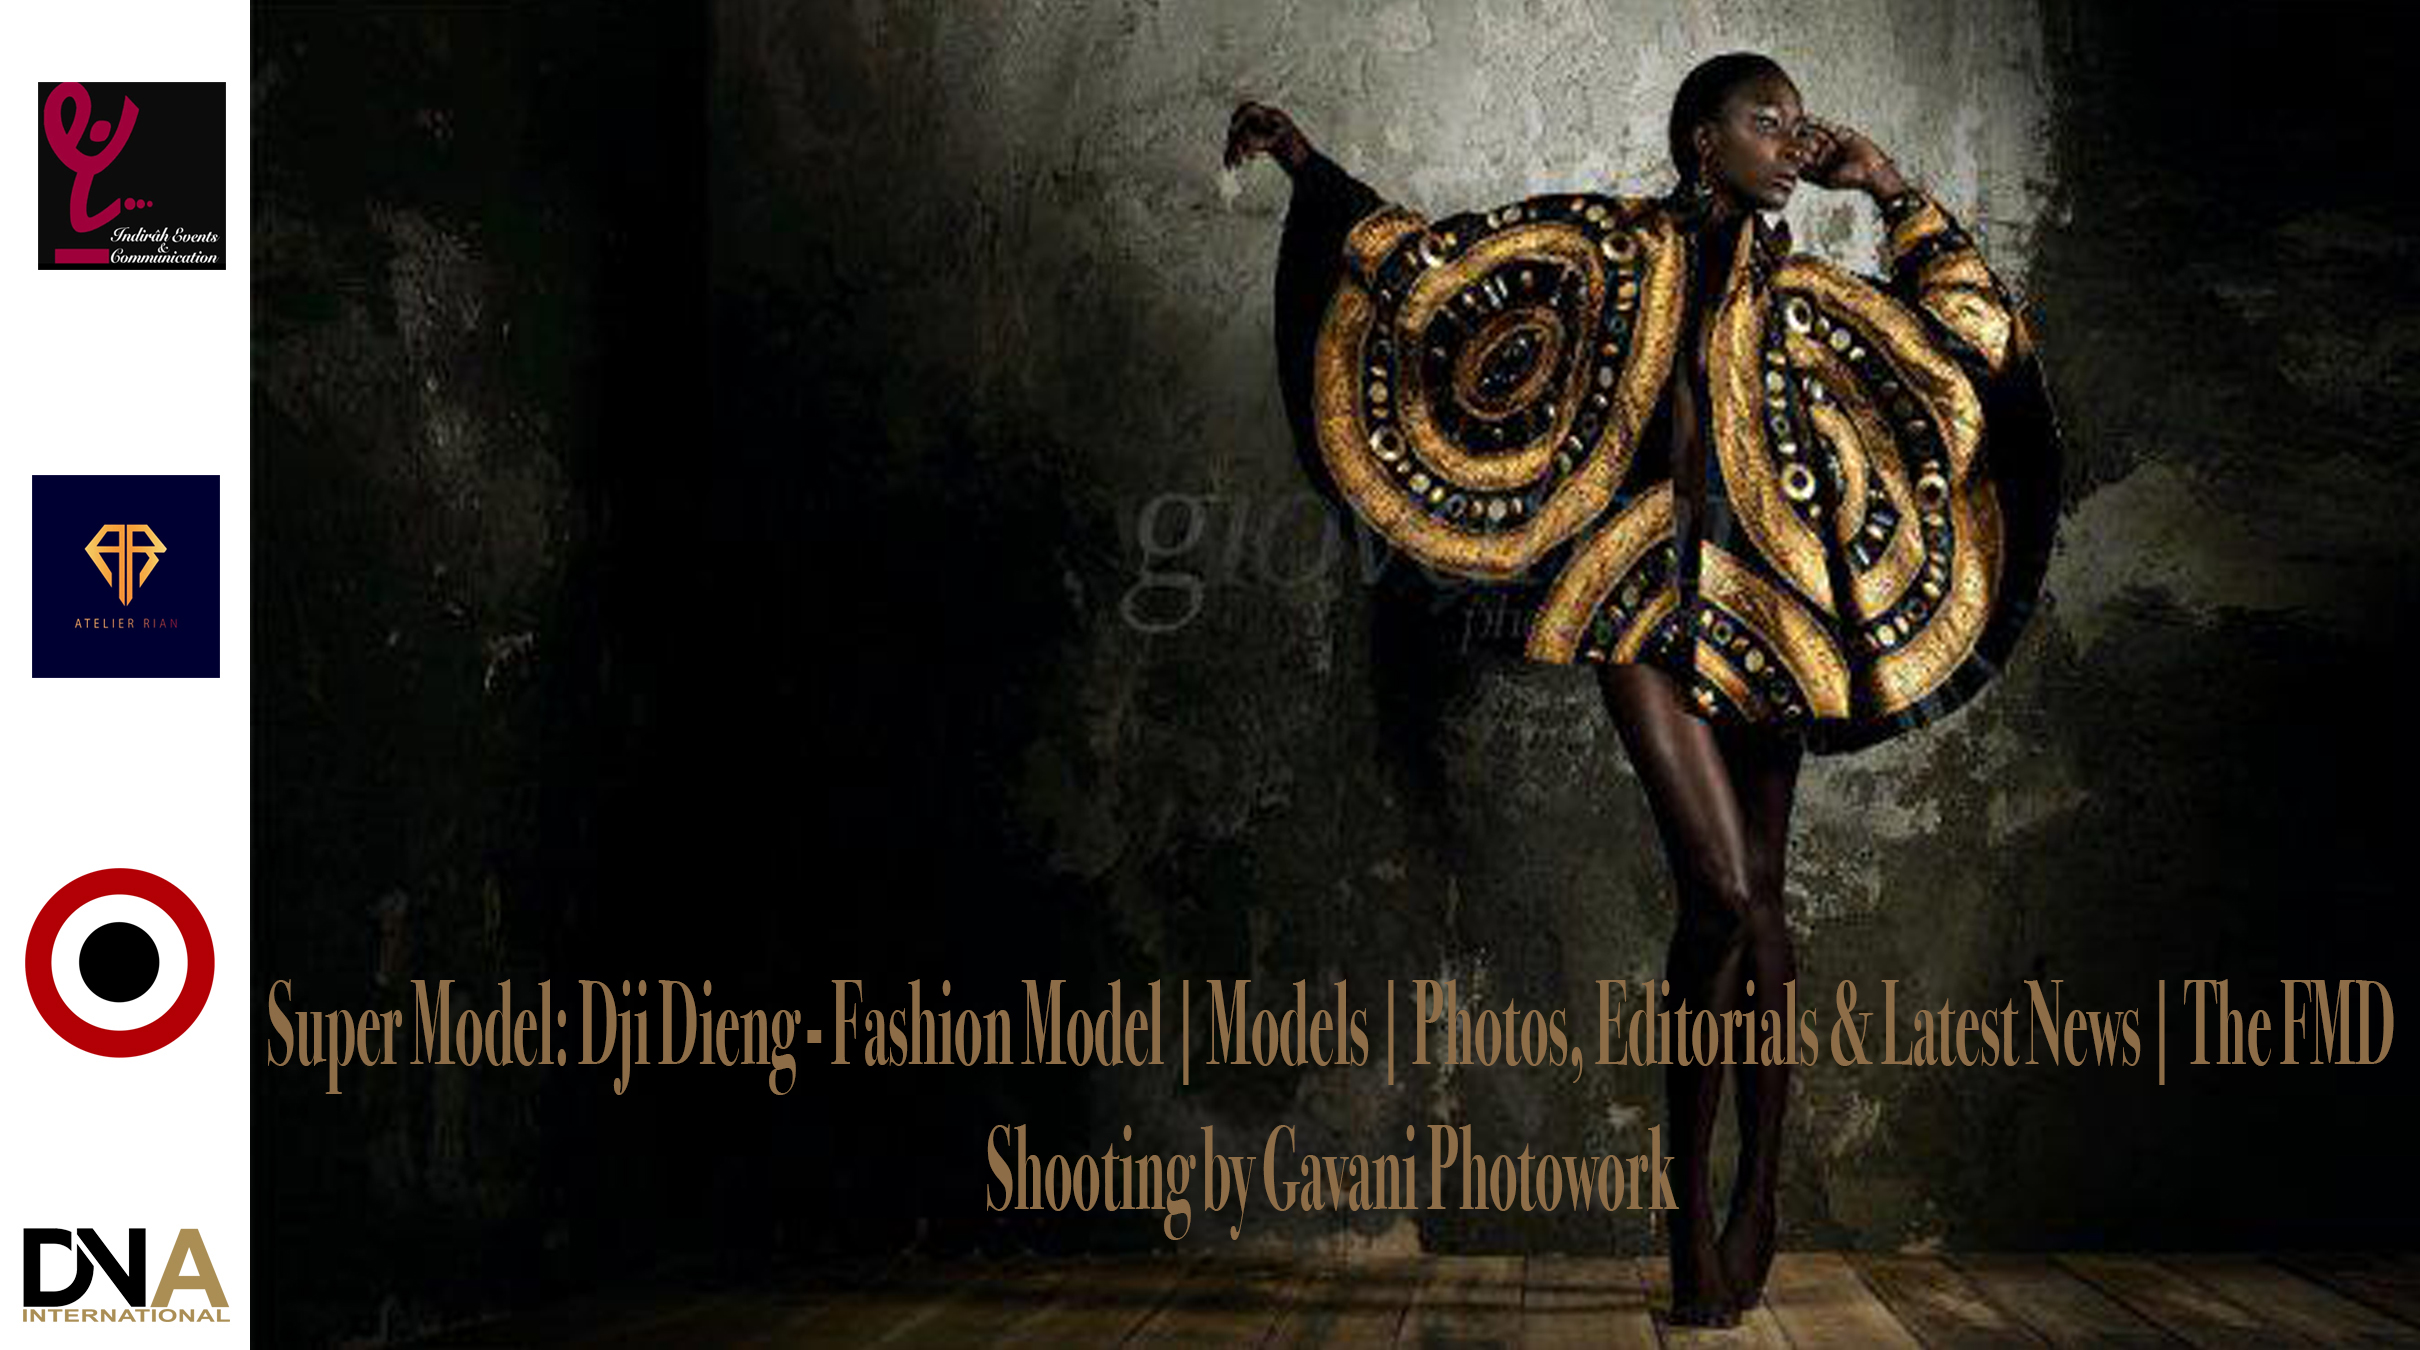 AFRICA-VOGUE-COVER-Super-Model-Dji-Dieng-Fashion-Model-Models-Photos-Editorials-Latest-News-The-FMD-Shooting-by-Gavani-Photowork-DN-AFRICA-Media-Partner